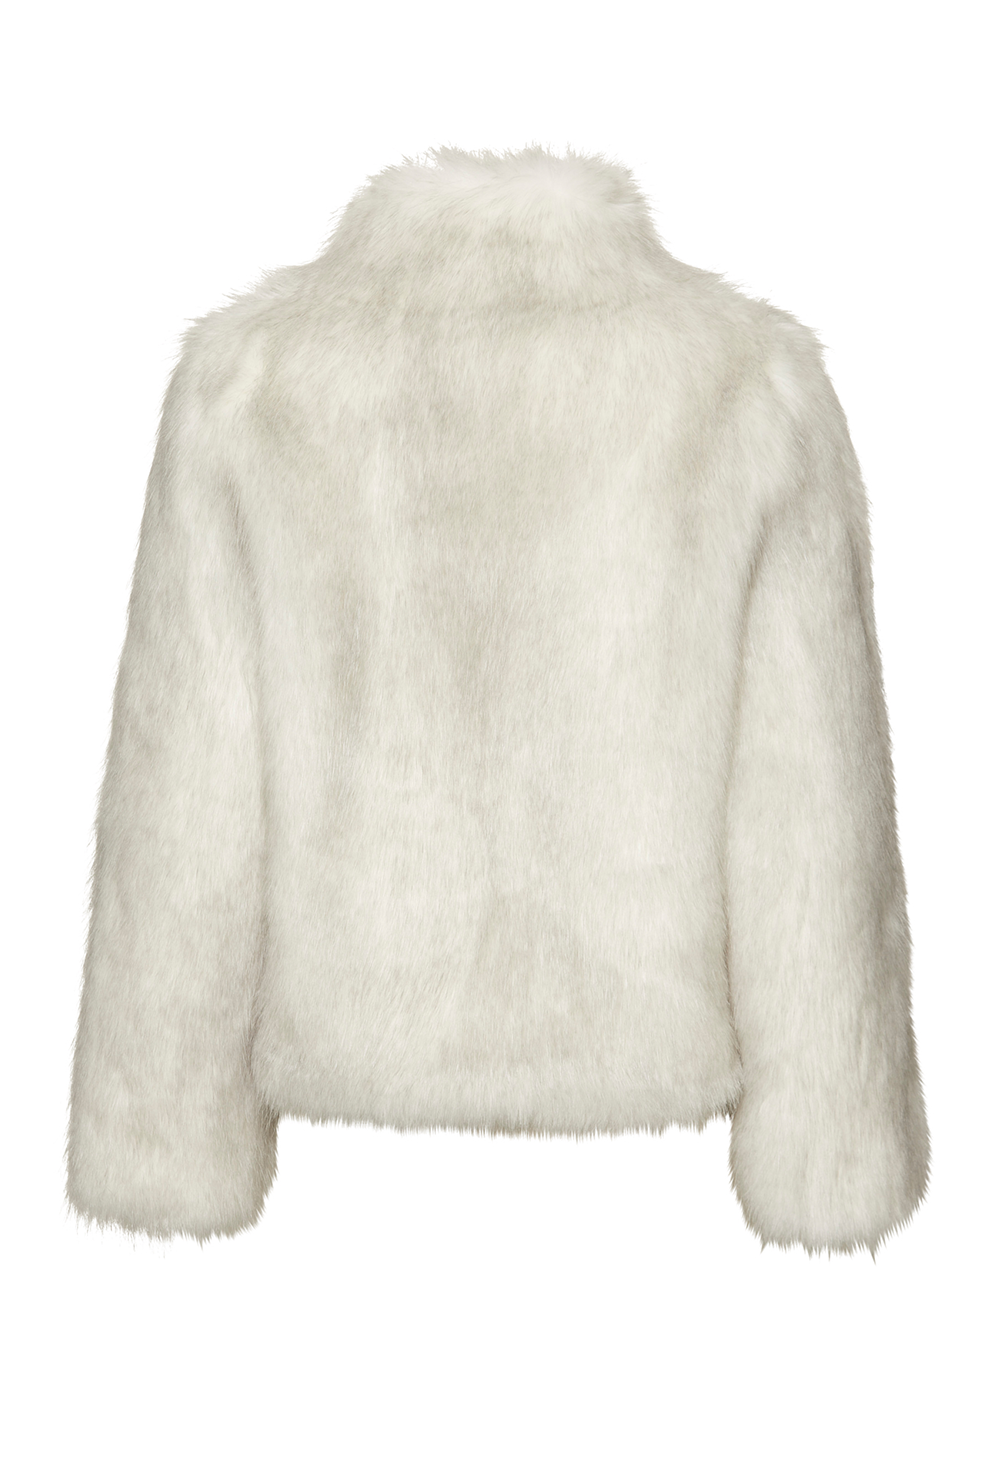 Fur Delish Jacket in Swiss White